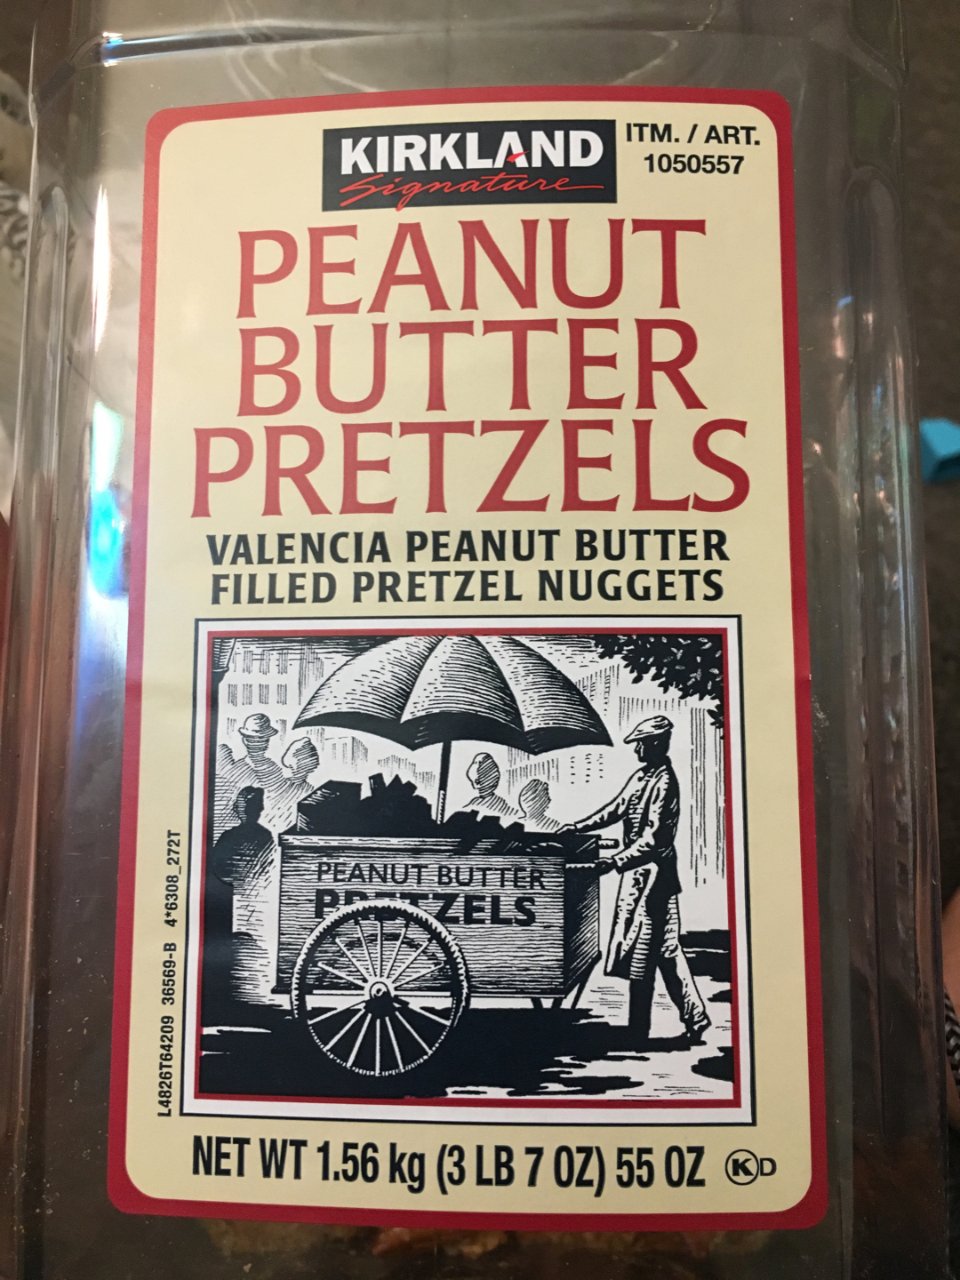 Peanut butter pretze...